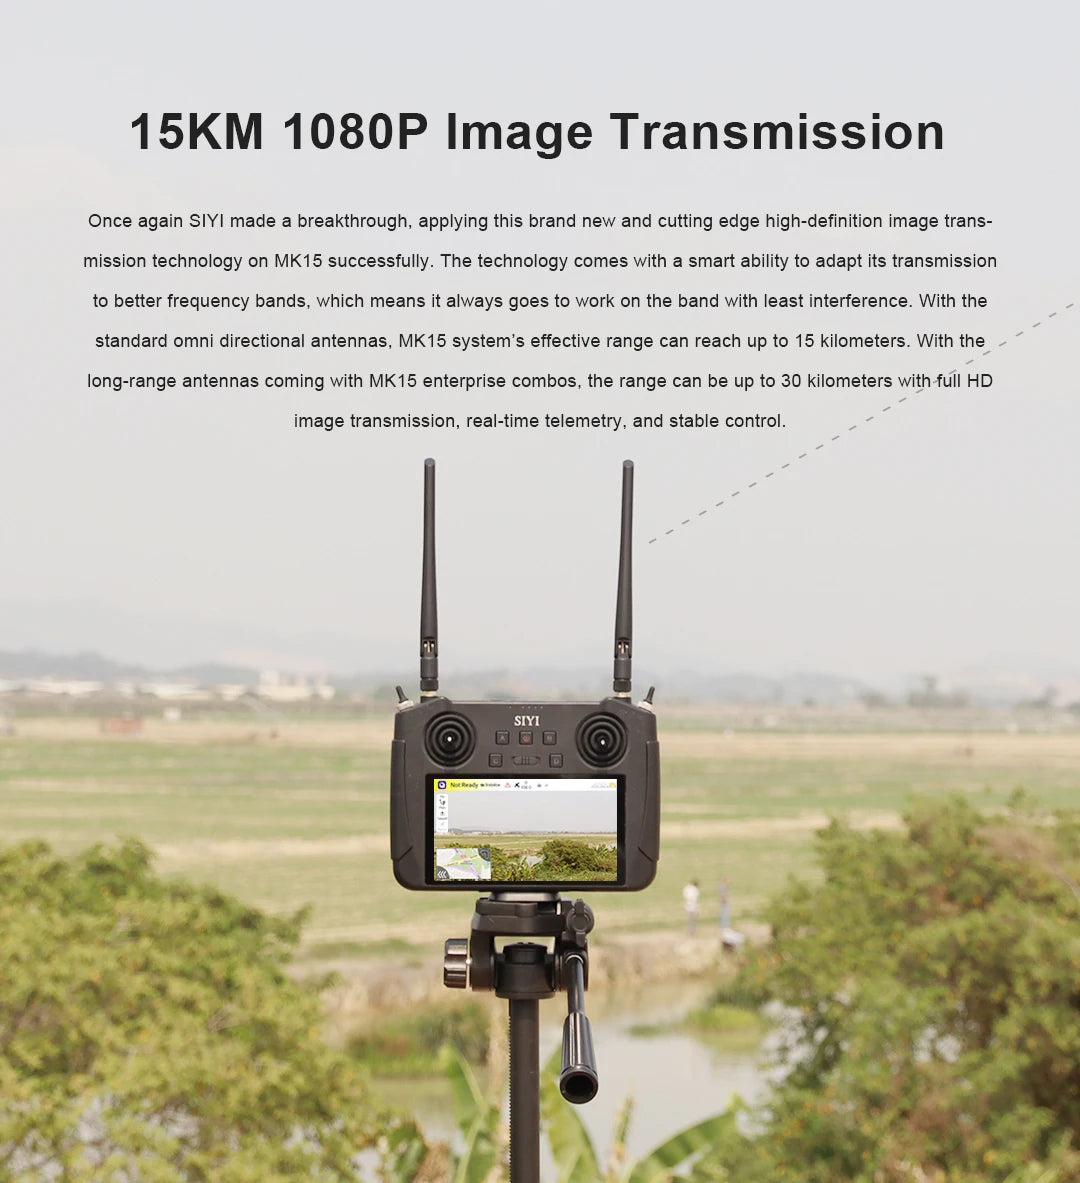 SIYI MK15 Transmitter, SIYI's new 15KM 1080P image transmission technology is a breakthrough 